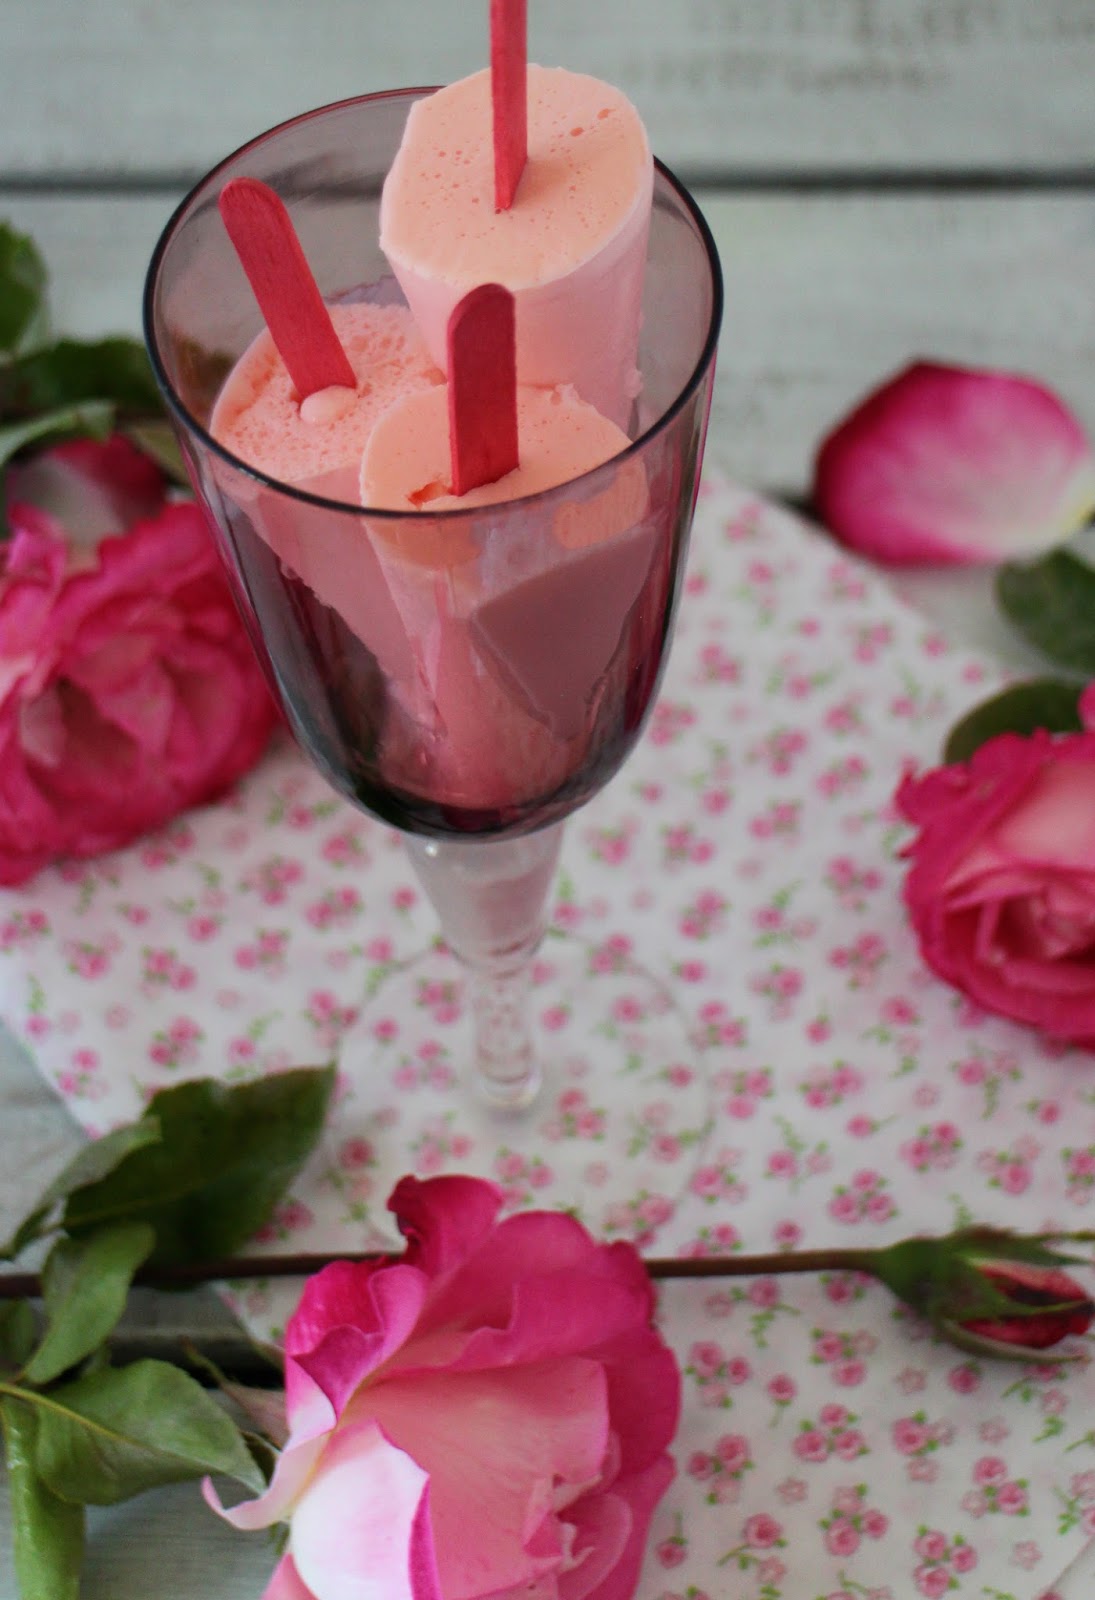 roses-and-cream-icecream, polos-de-nata-y-rosas